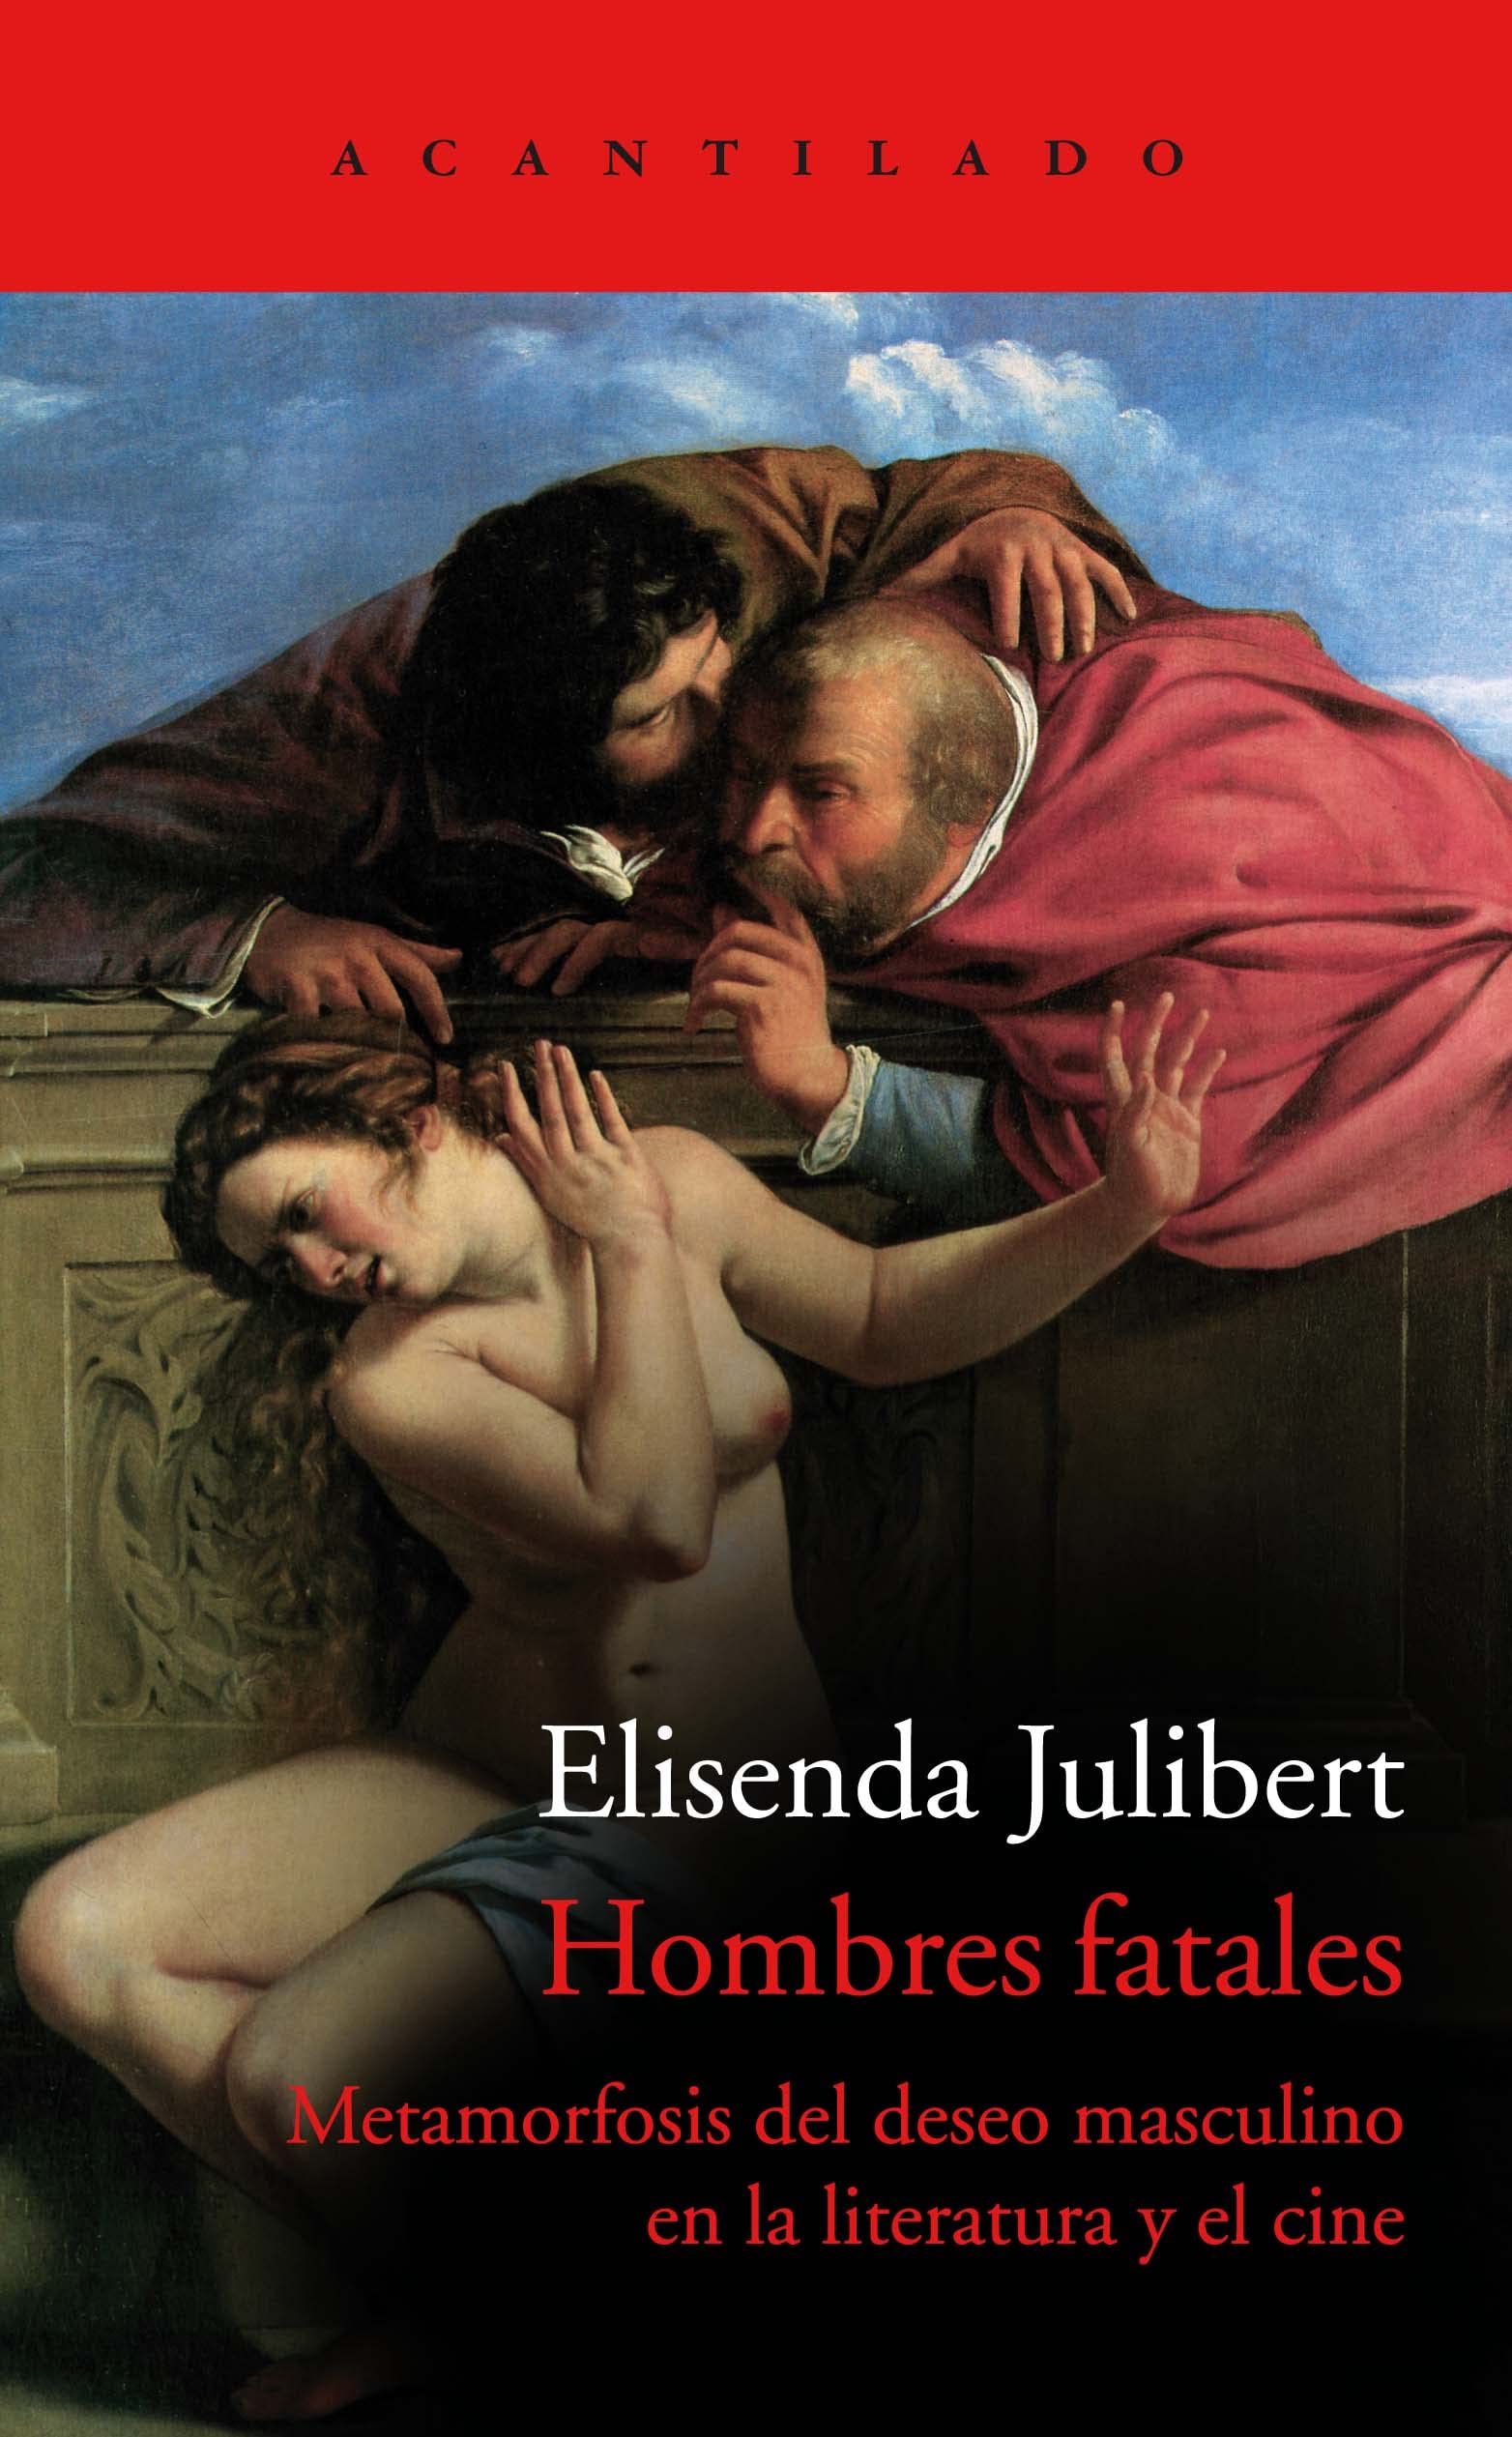 Hombres fatales, de Elisenda Julibert